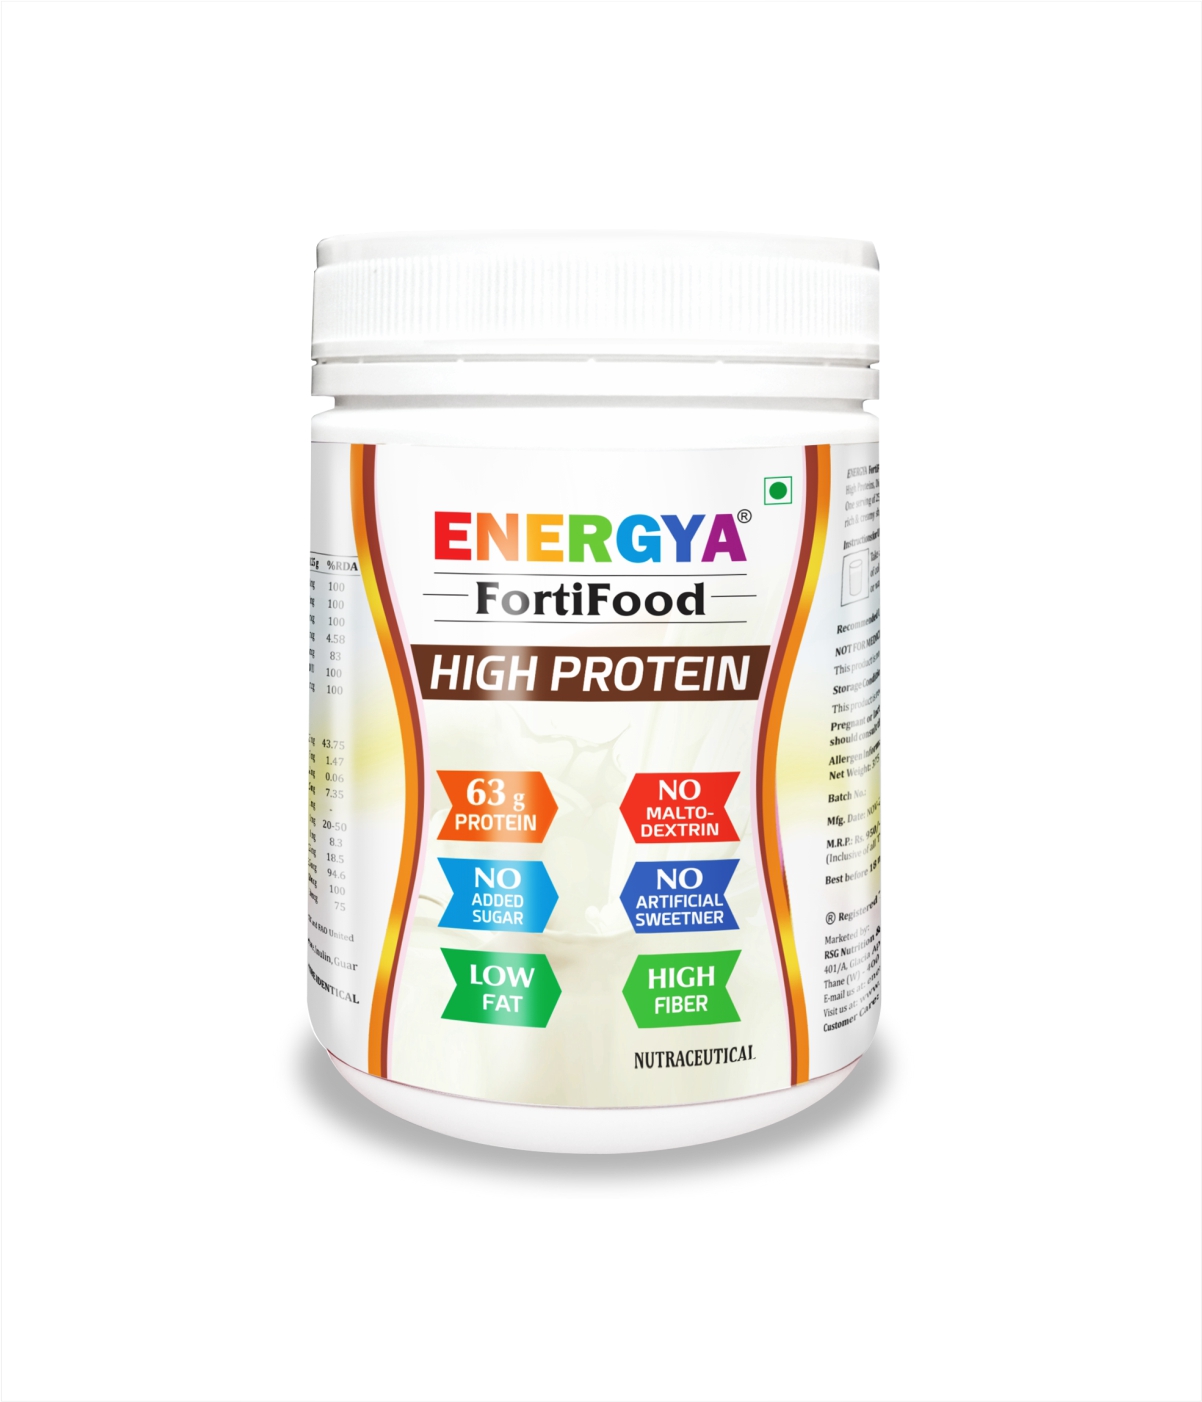 ENERGYA FORTIFOOD High Protein